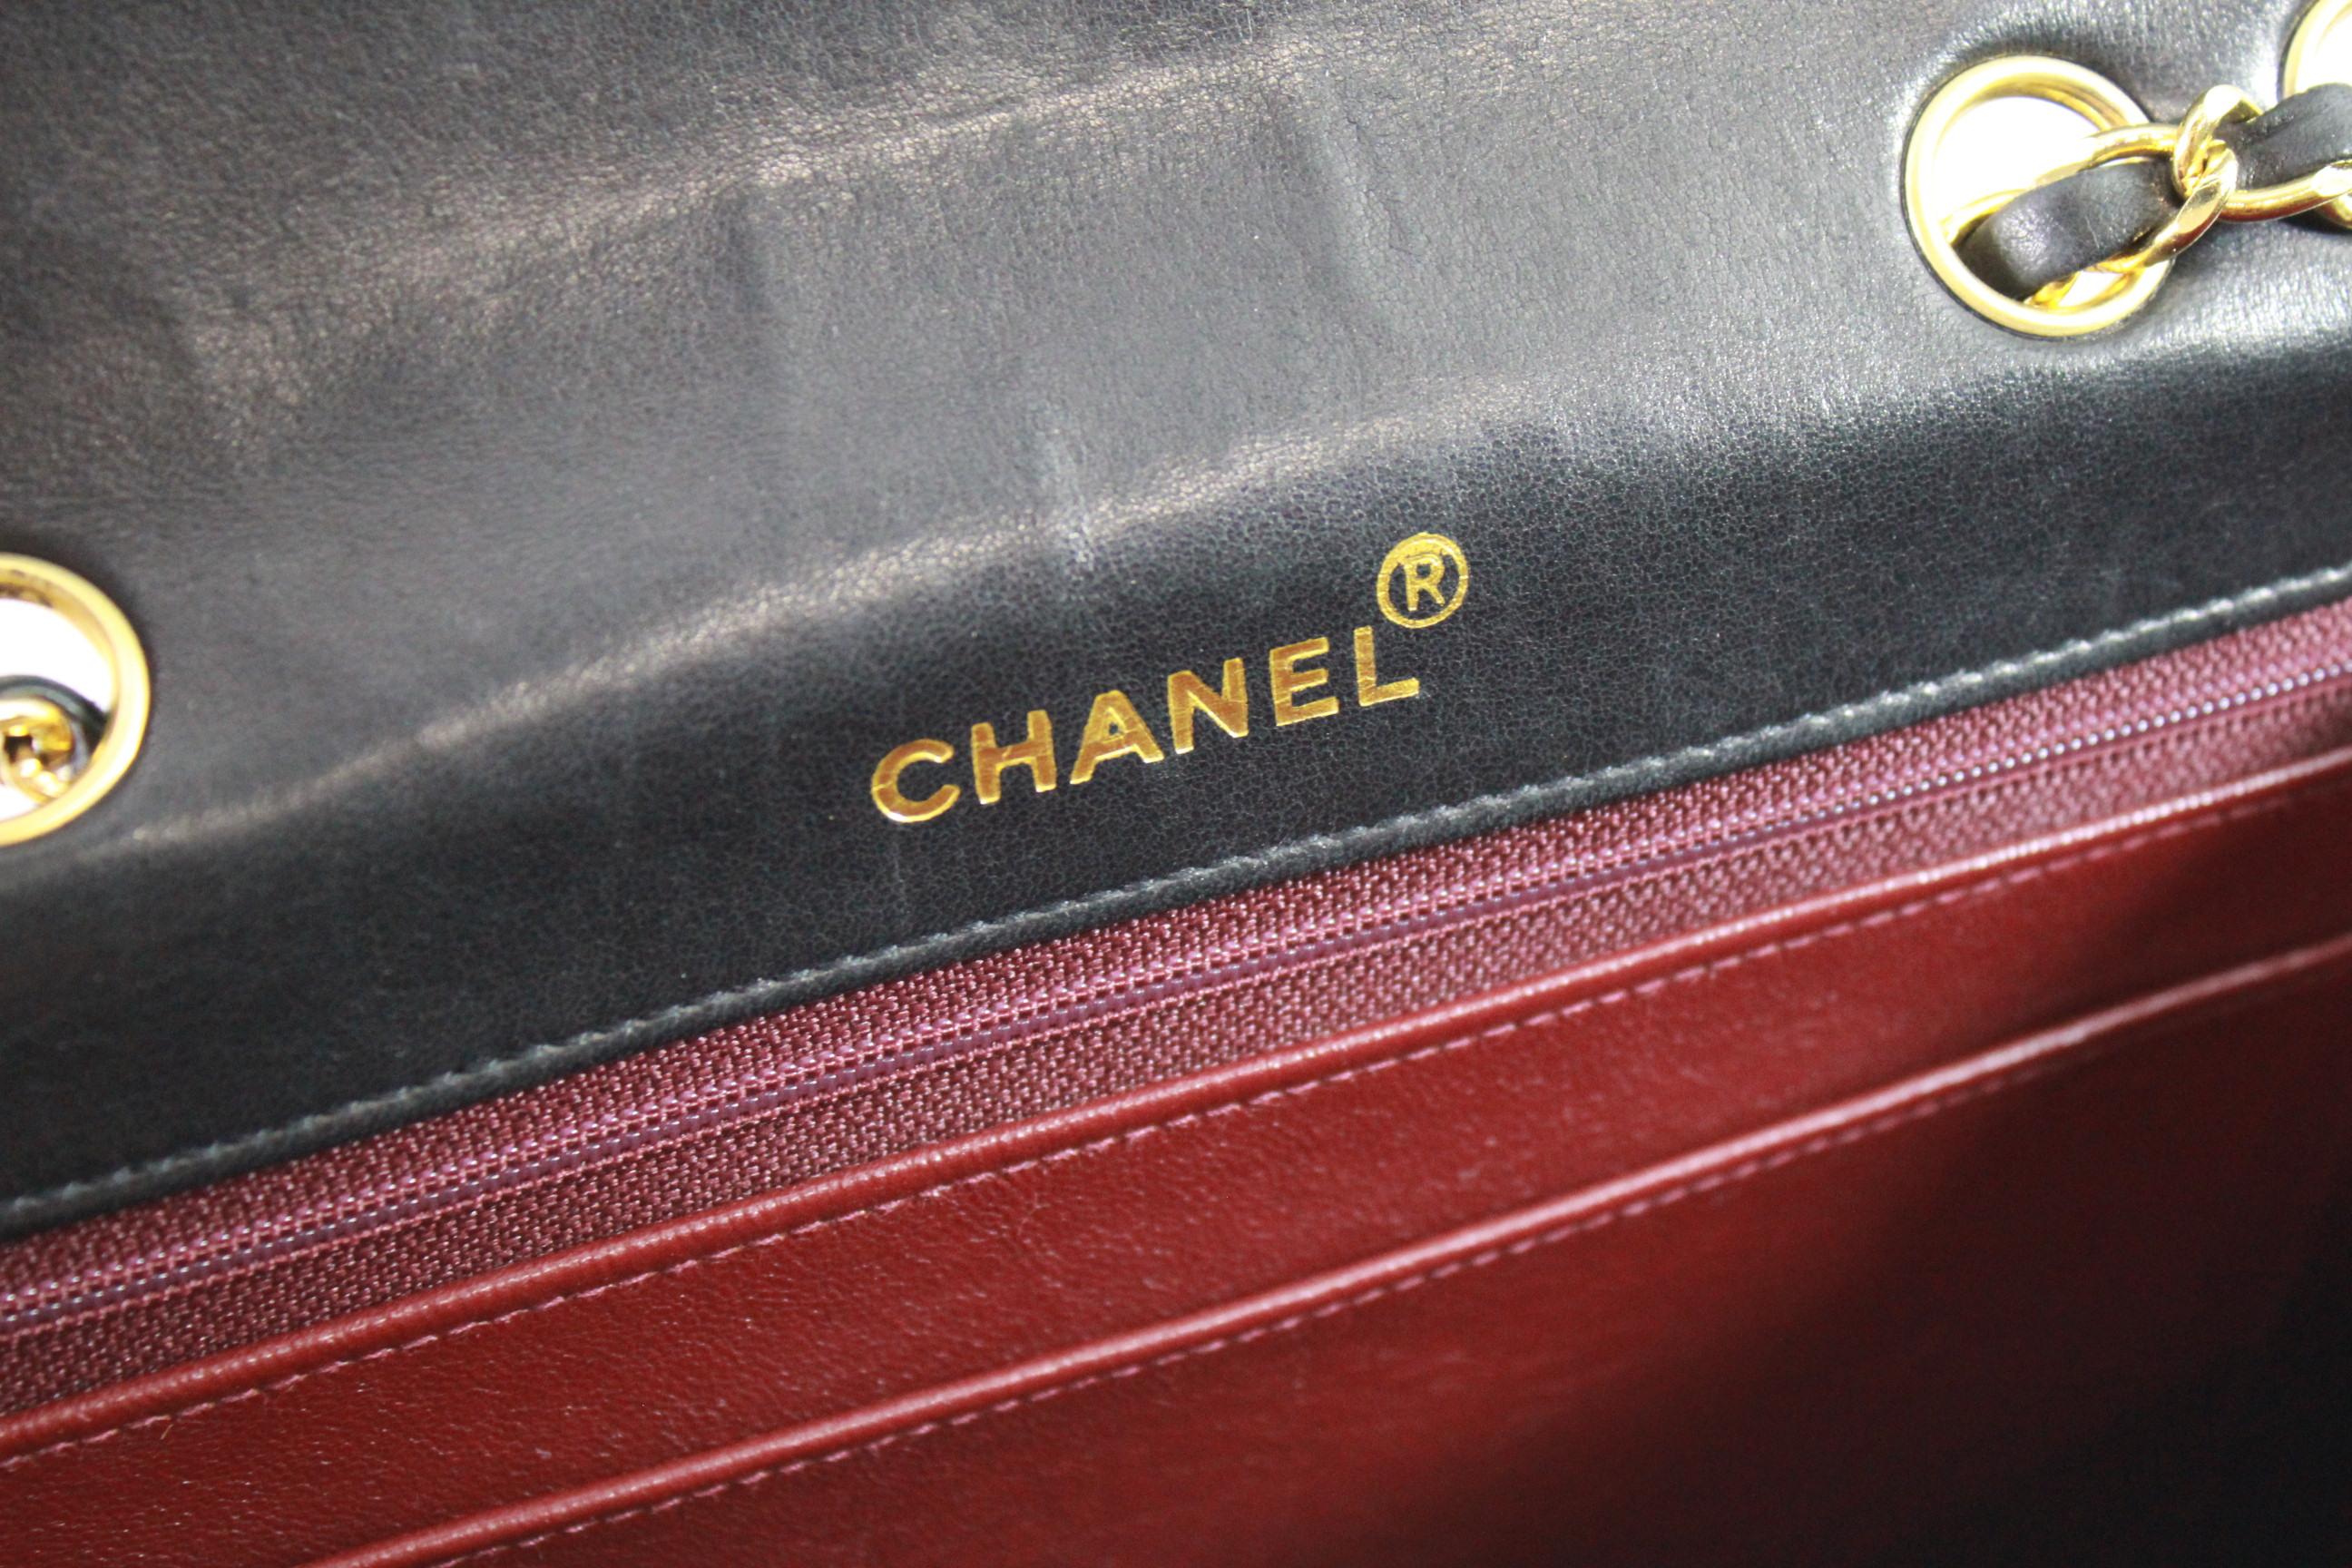 1991 Vintage Chanel Black Lambskin Leather Bag with 2.55 Golden Hardware 2